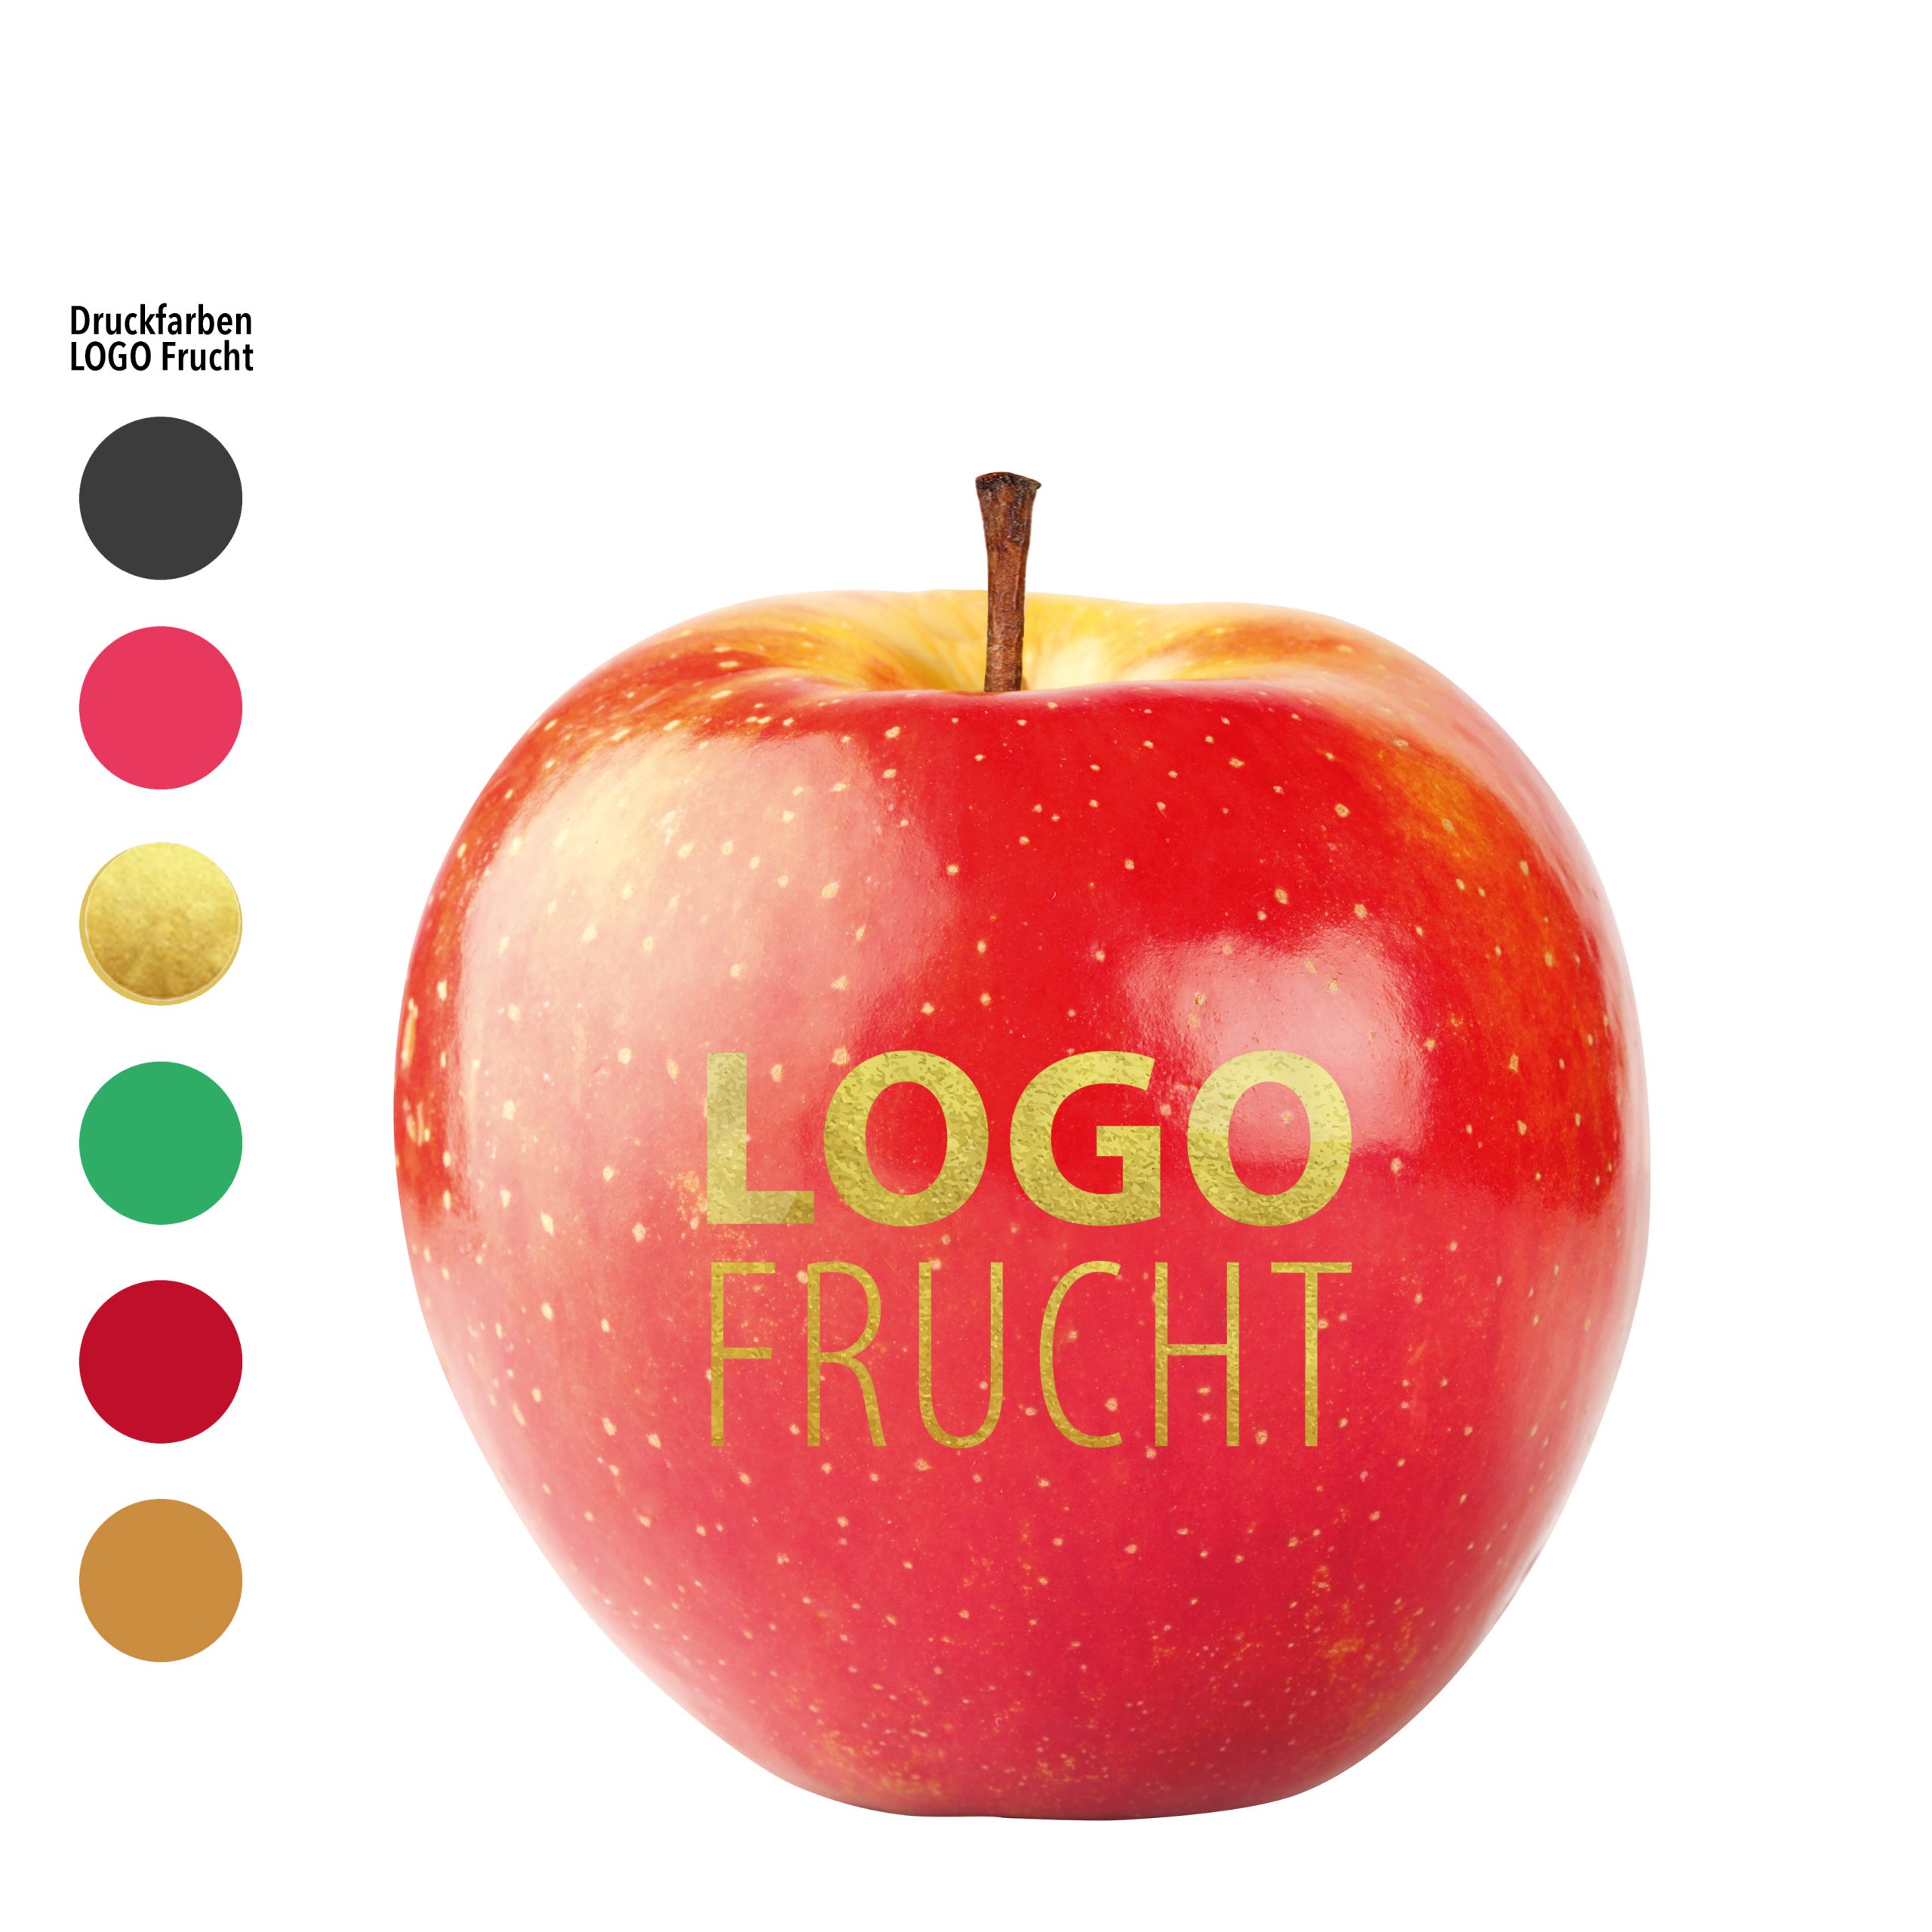 LogoFrucht Apfel rot